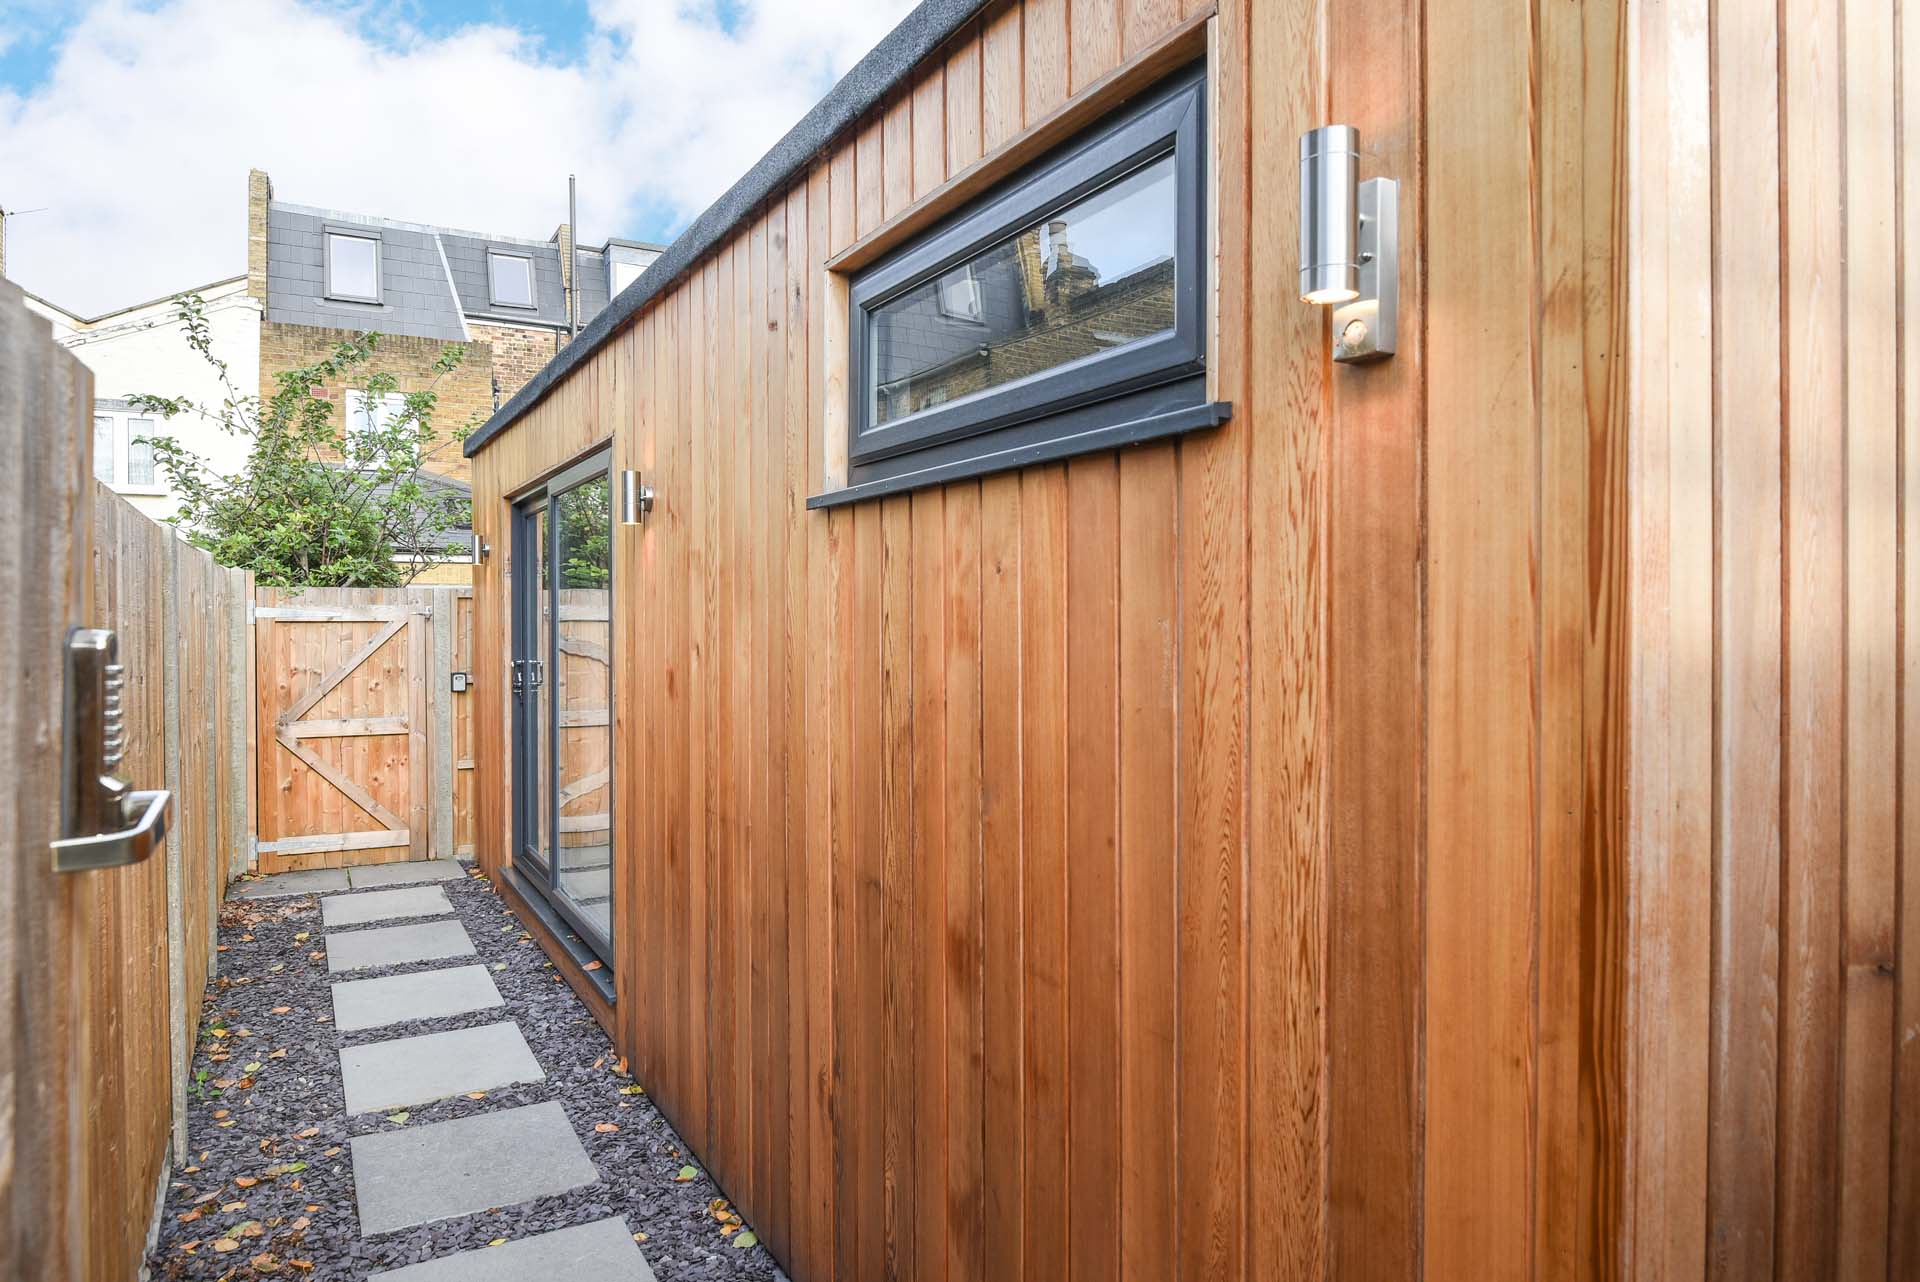 Garden room for Airbnb in Essex